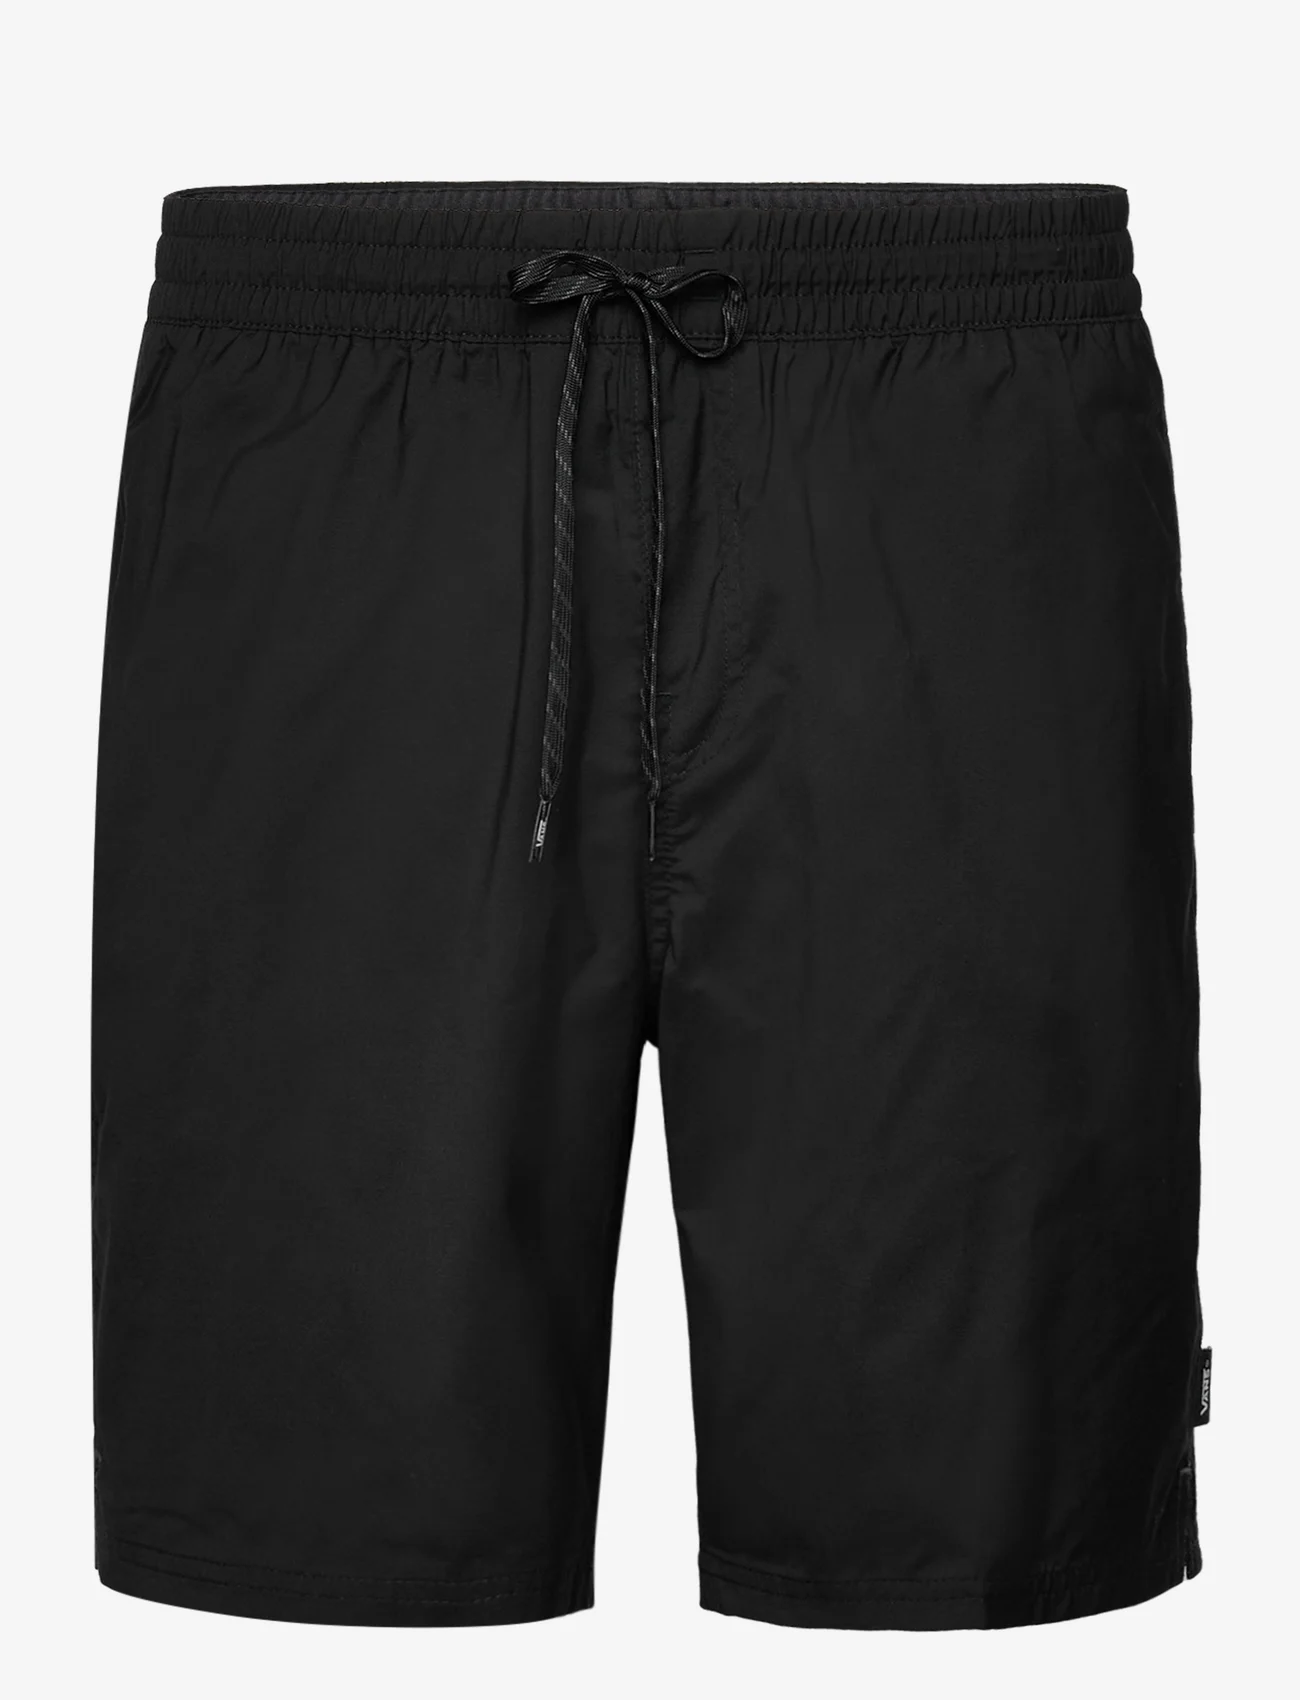 VANS - PRIMARY SOLID ELASTIC BOARDSHORT - sports shorts - black - 0